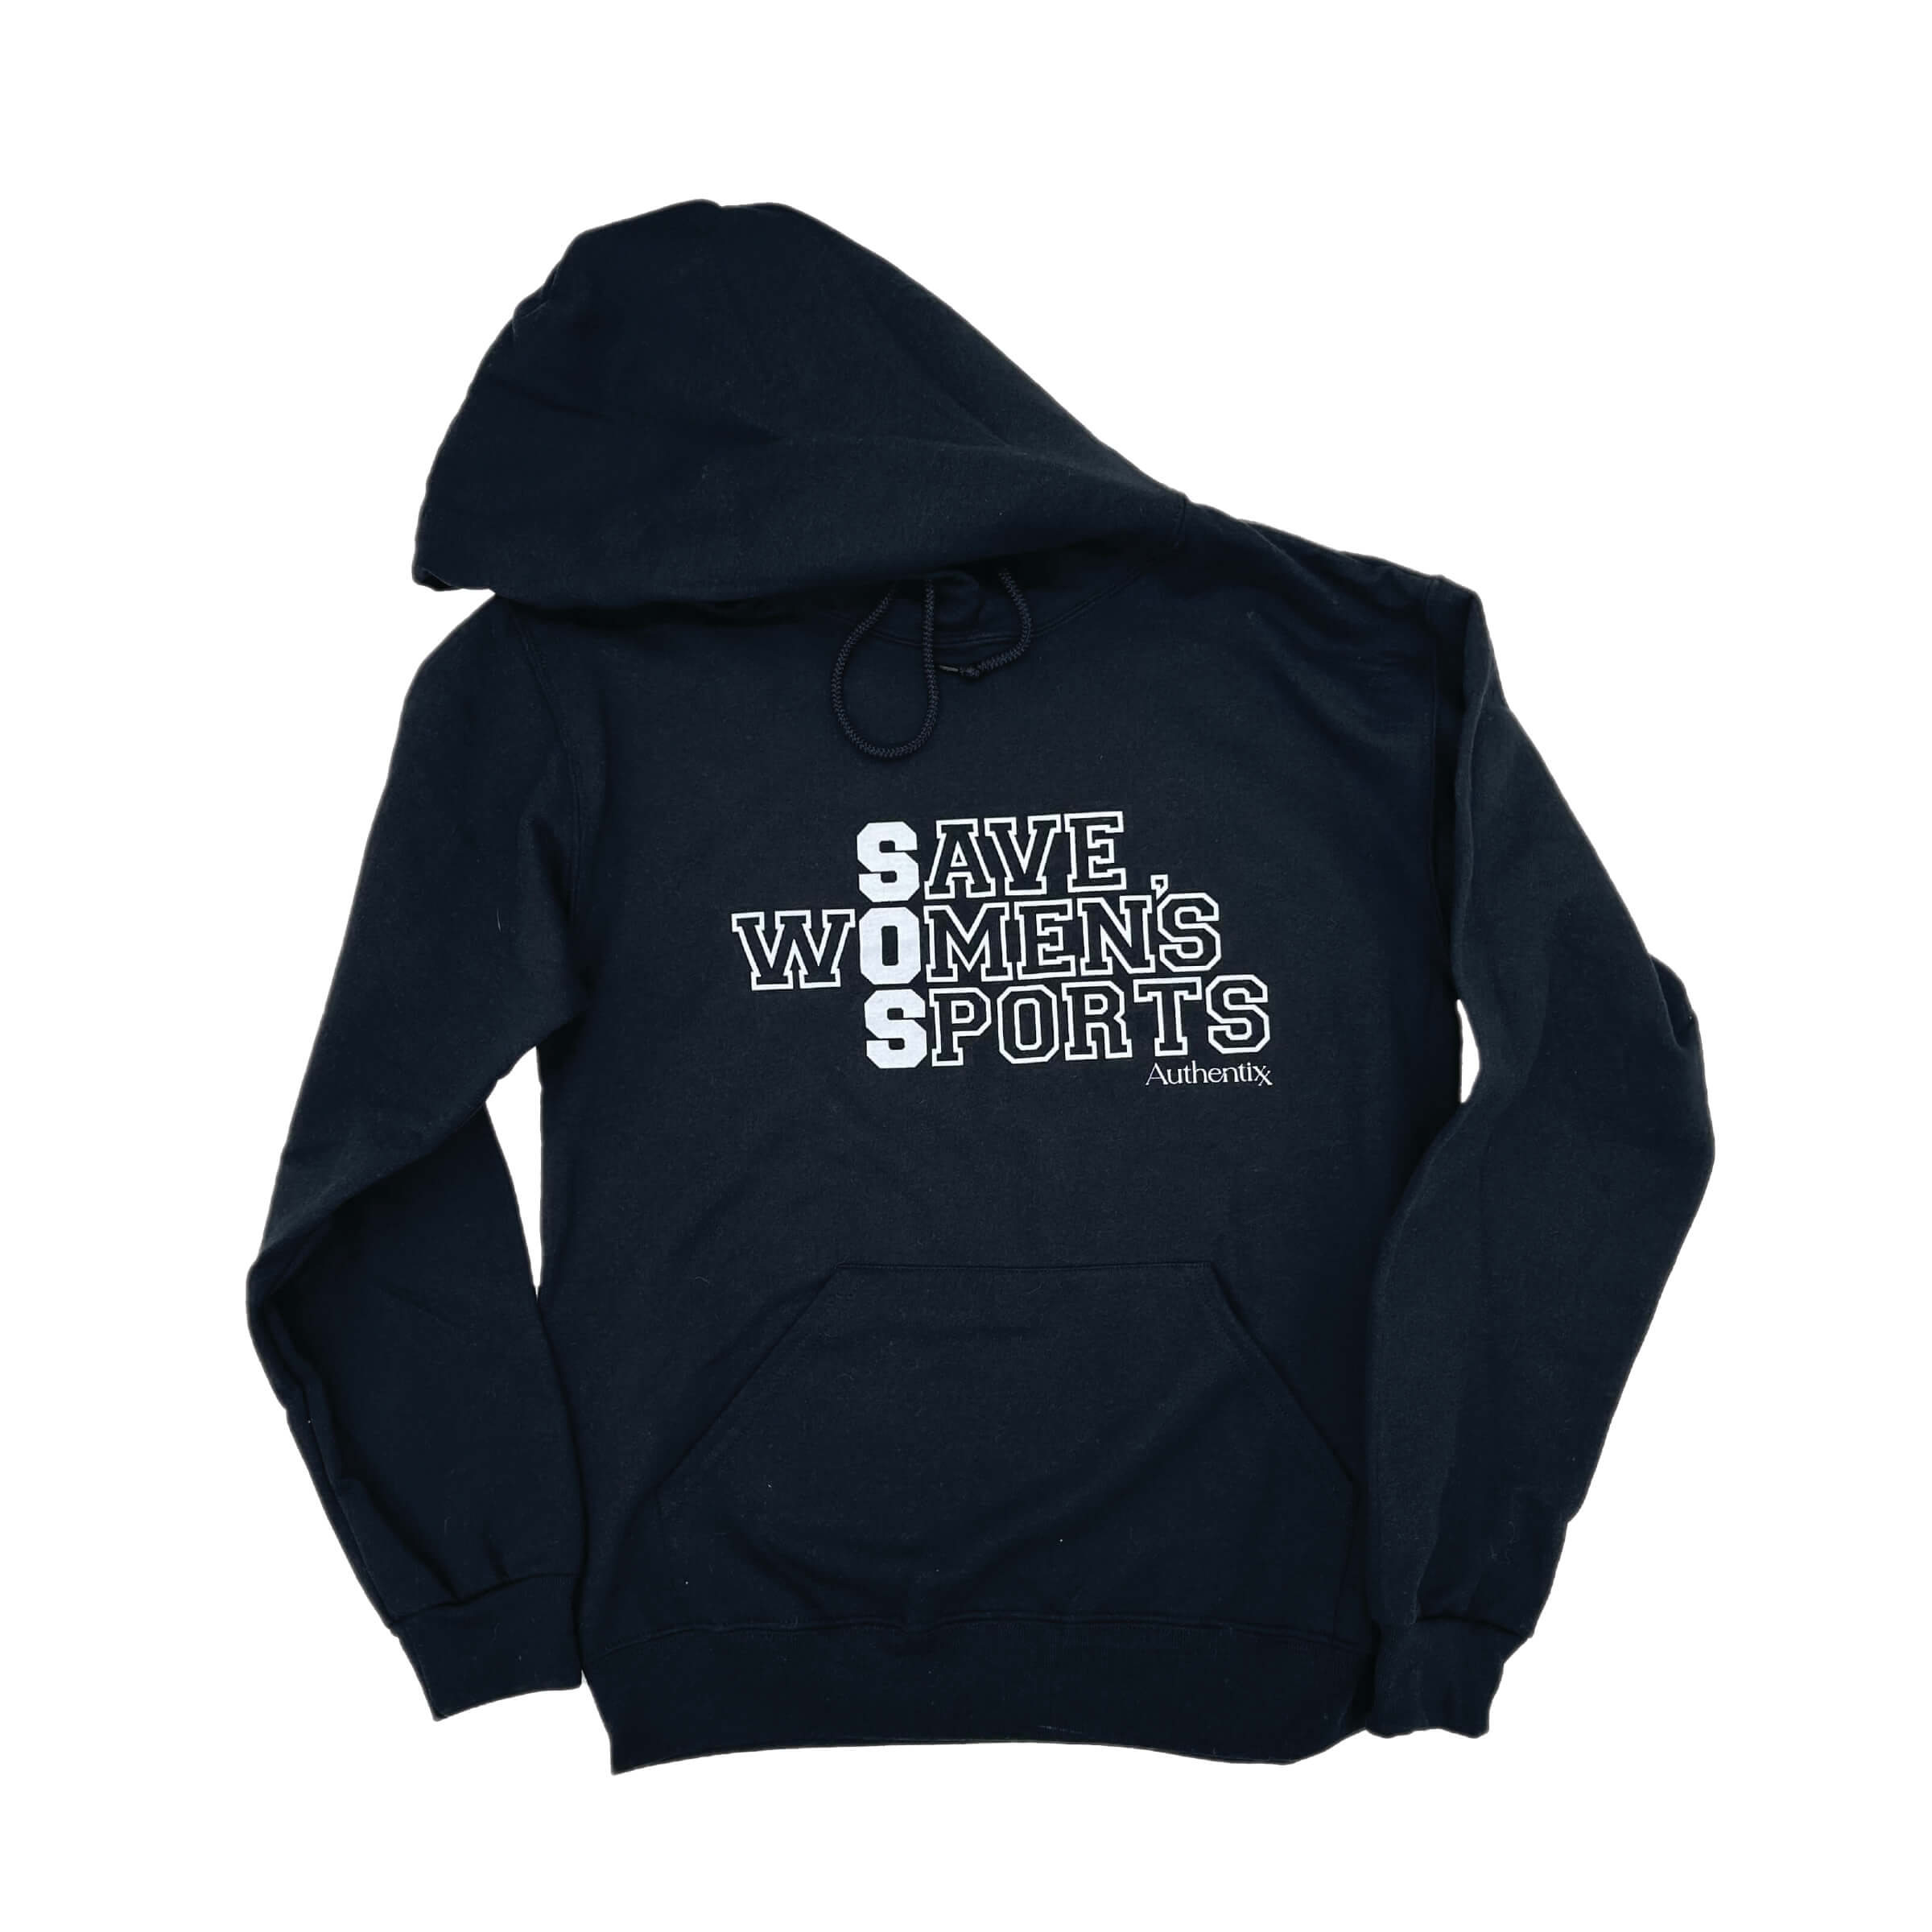 SOS Hooded Sweatshirt – Authentixx